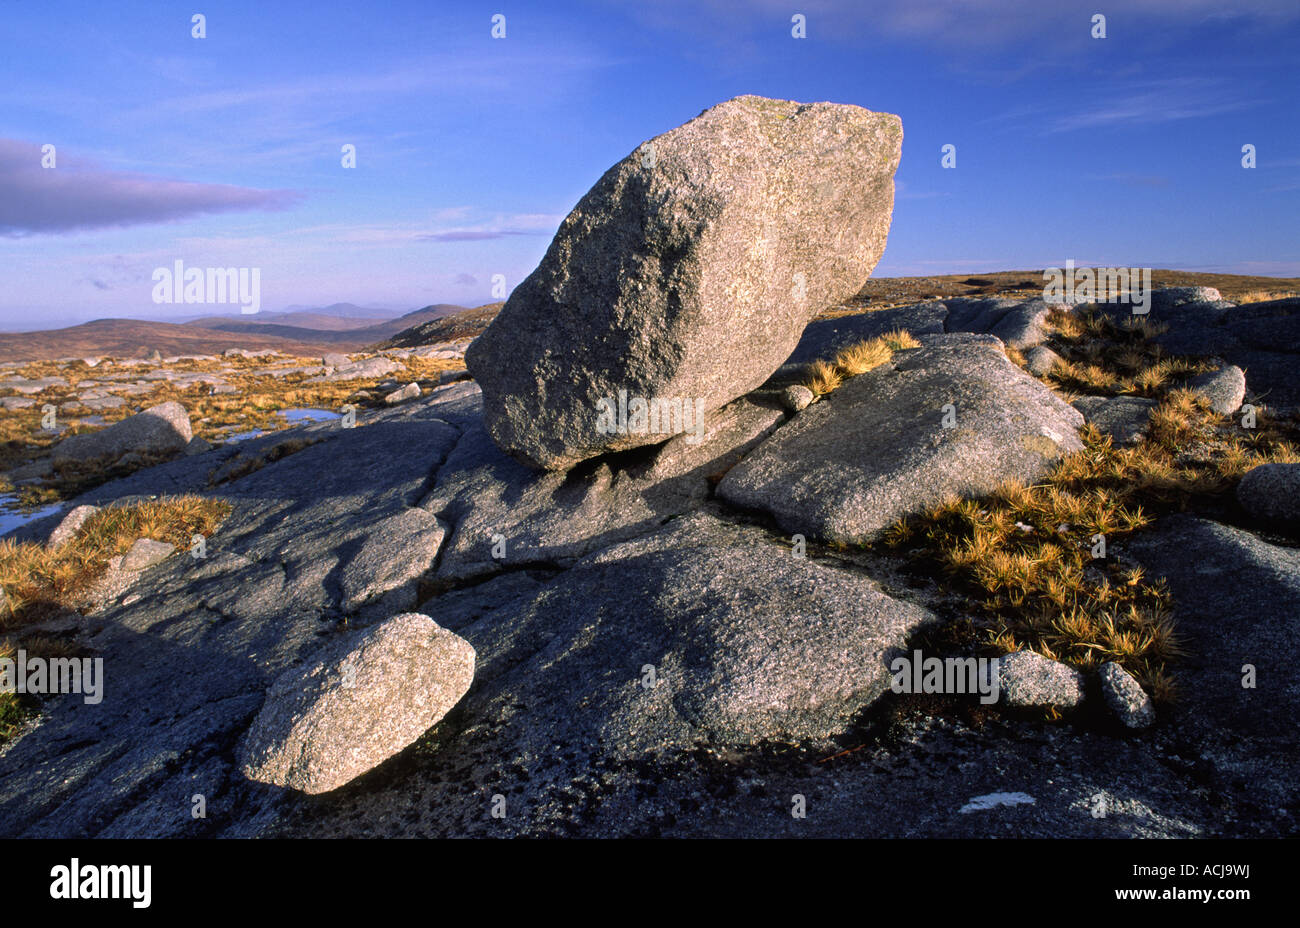 Granite glacial erratic near the summit of Moylenanav mountain, Glendowan Mountains, County Donegal, Ireland. Stock Photo